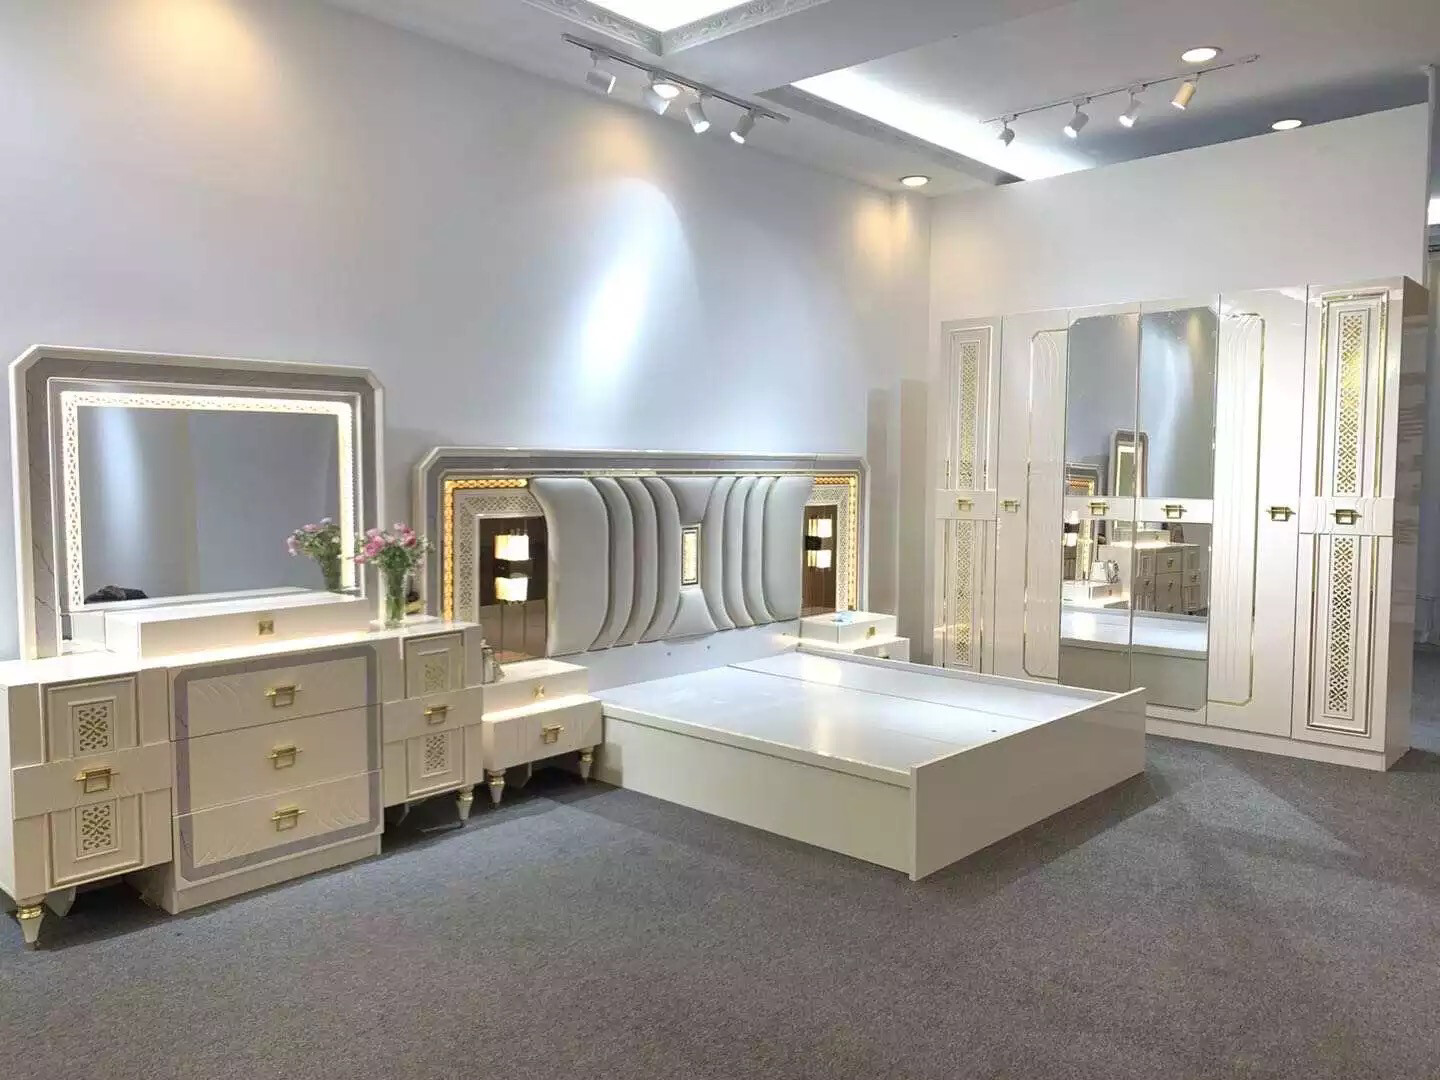 CabinsGate Royal Quality Bedroom Sets